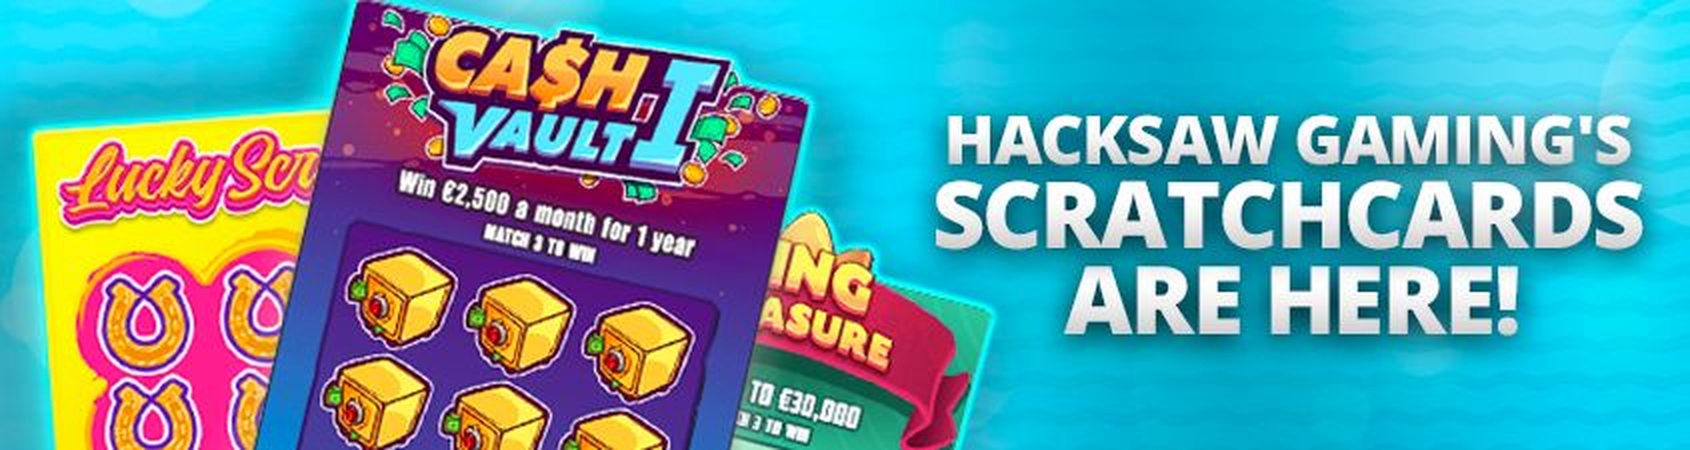 The Cash Vault I Online Slot Demo Game by Hacksaw Gaming